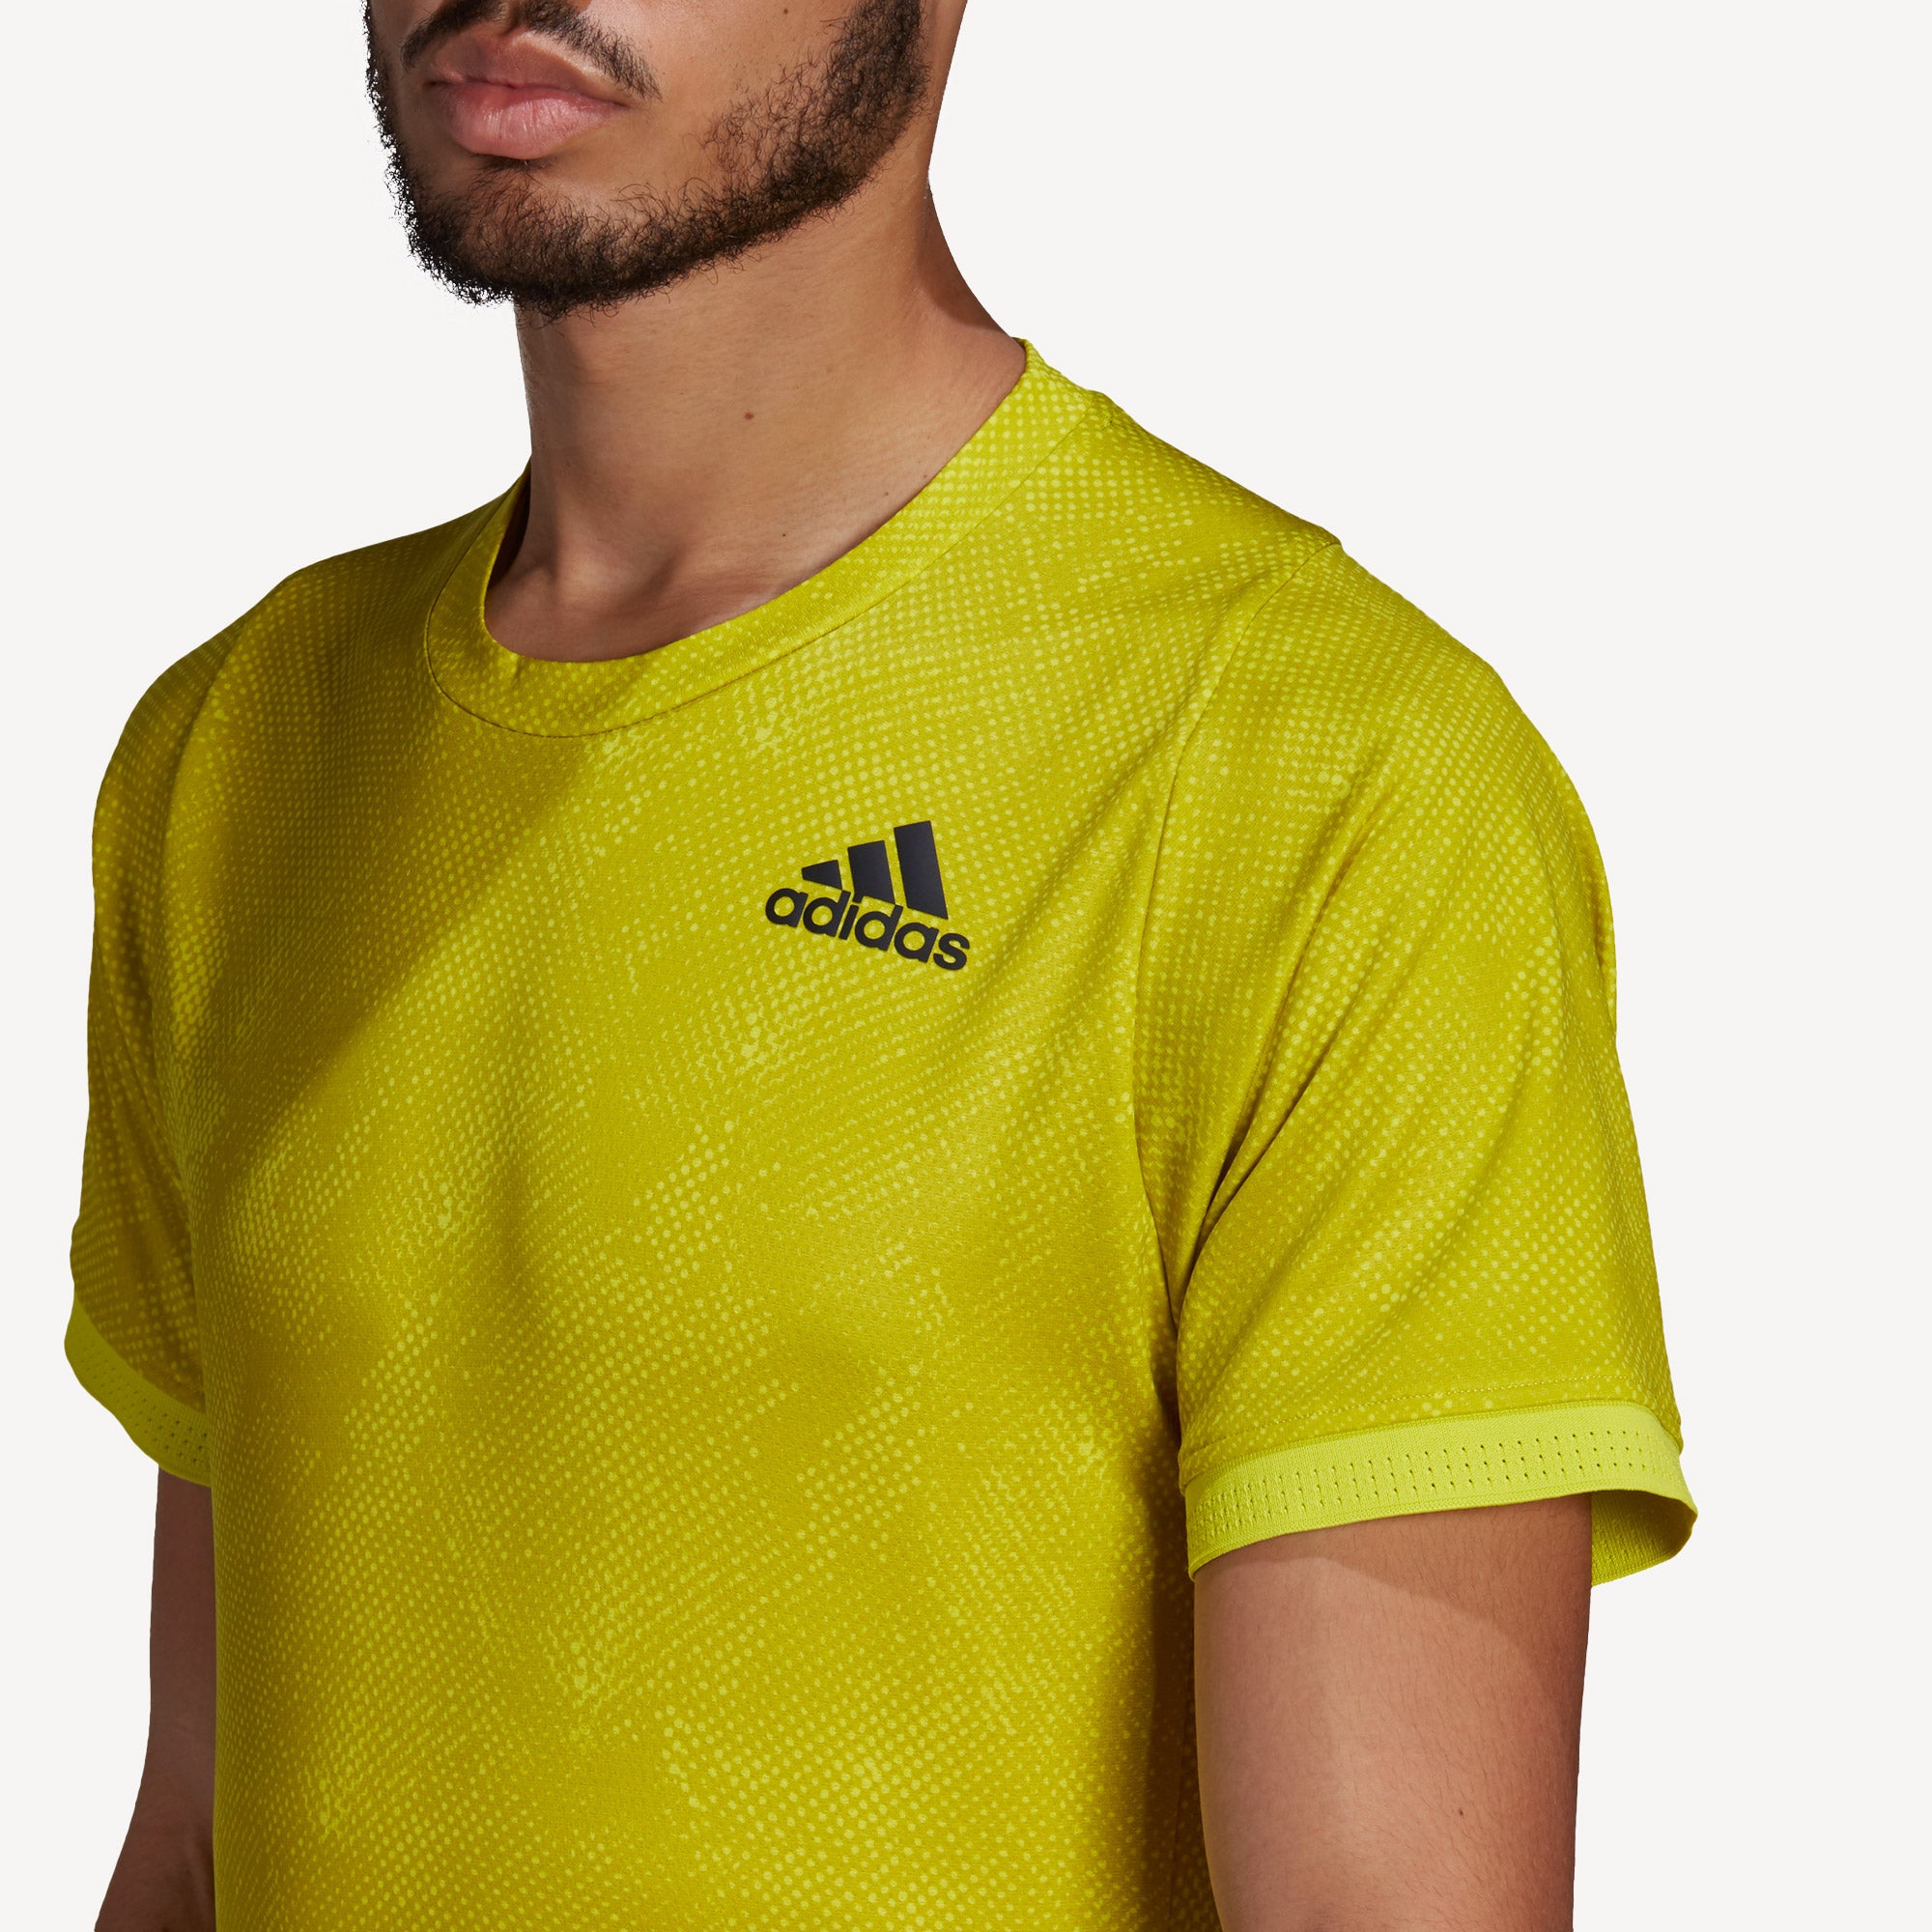 adidas Freelift Primeblue Men's Printed Tennis Shirt Yellow (4)